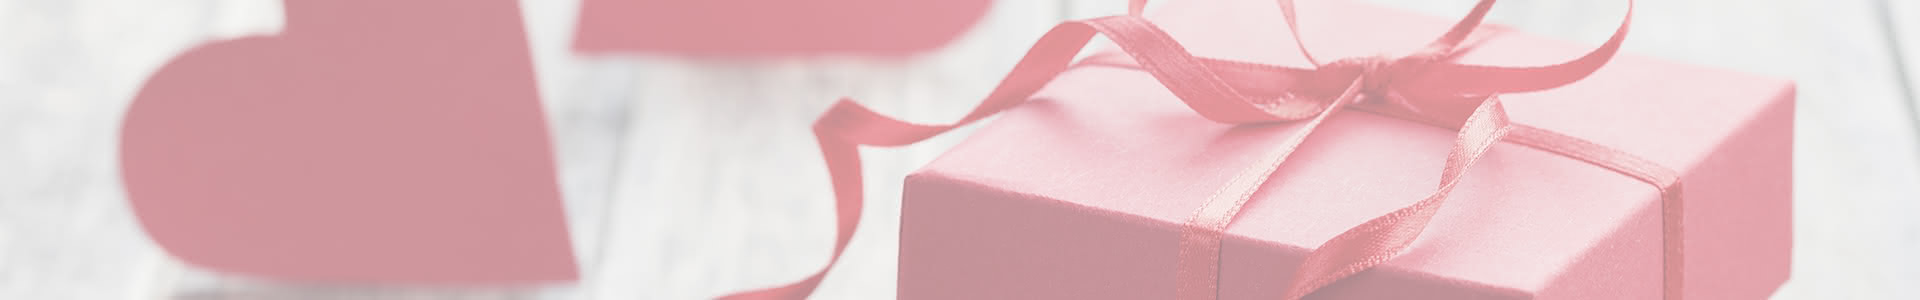 5 ideas de regalo para triunfar en San Valentín